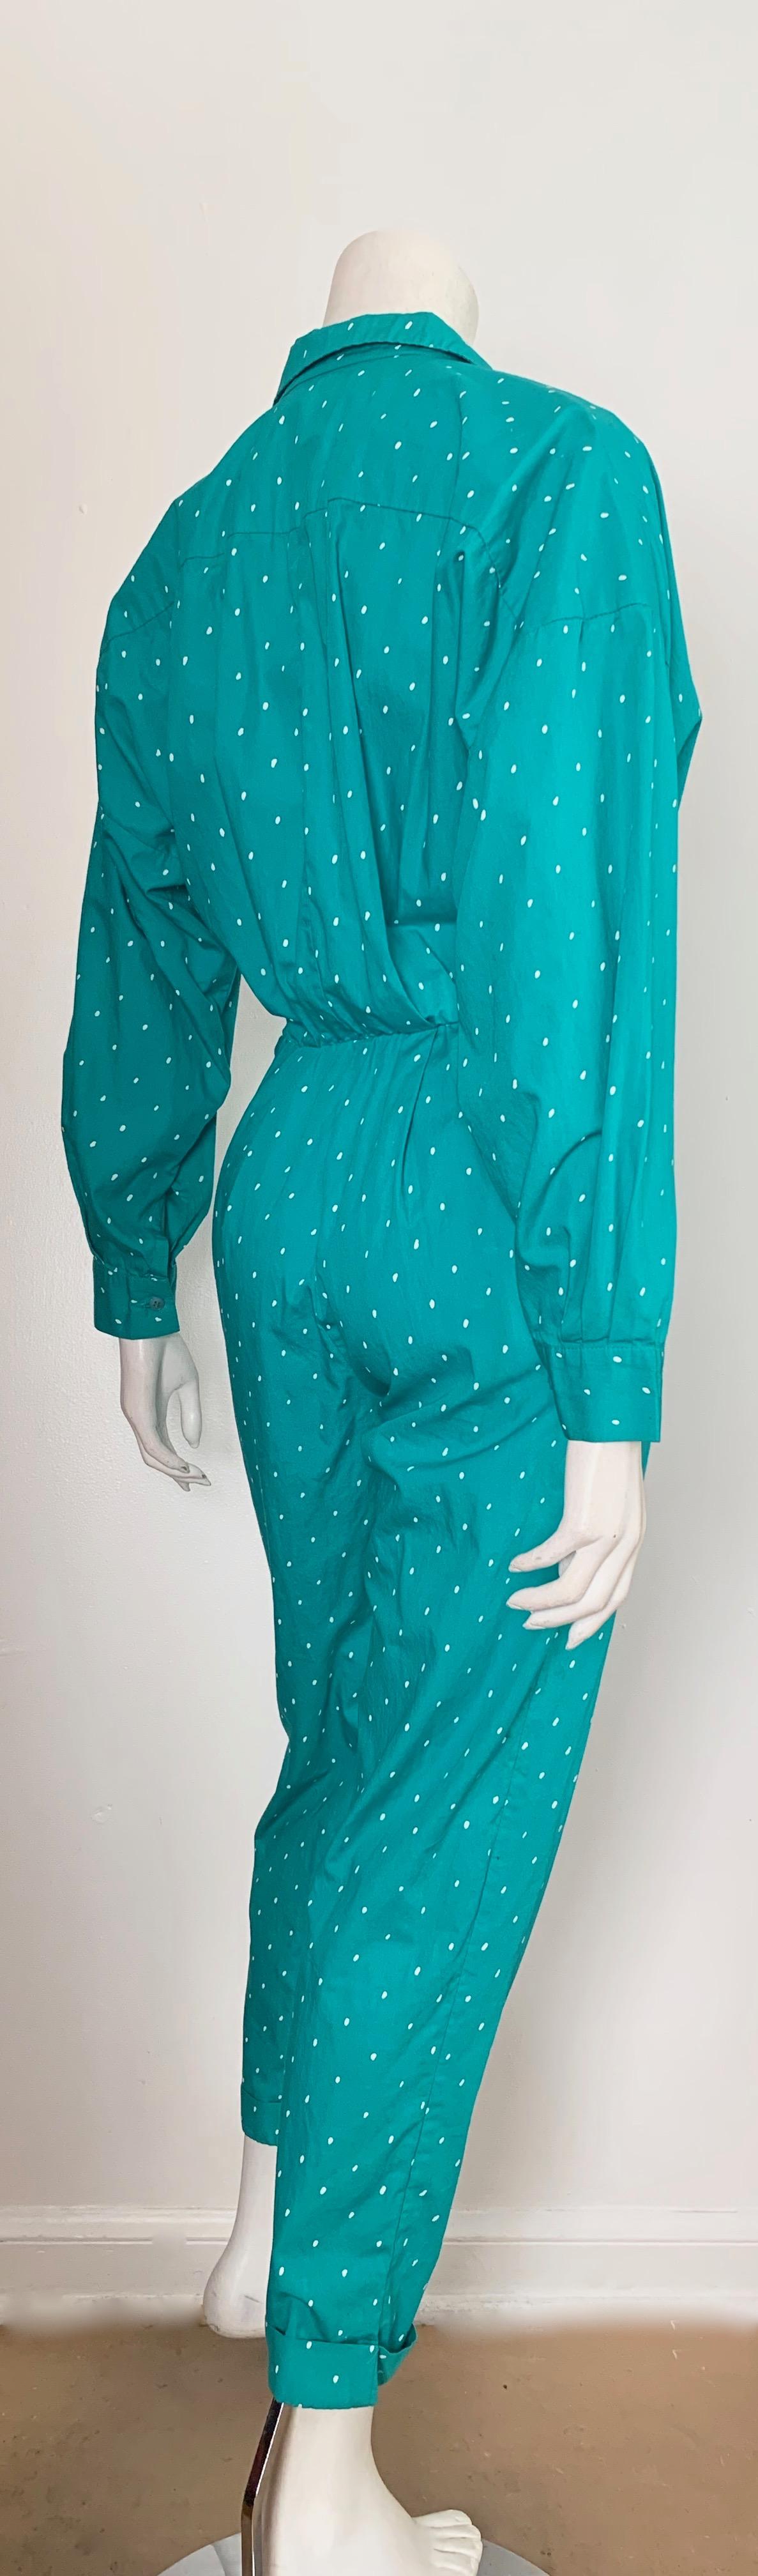 Saint Germain 1980s Cotton Polka Dot Jumpsuit with Pockets Size 4.  4